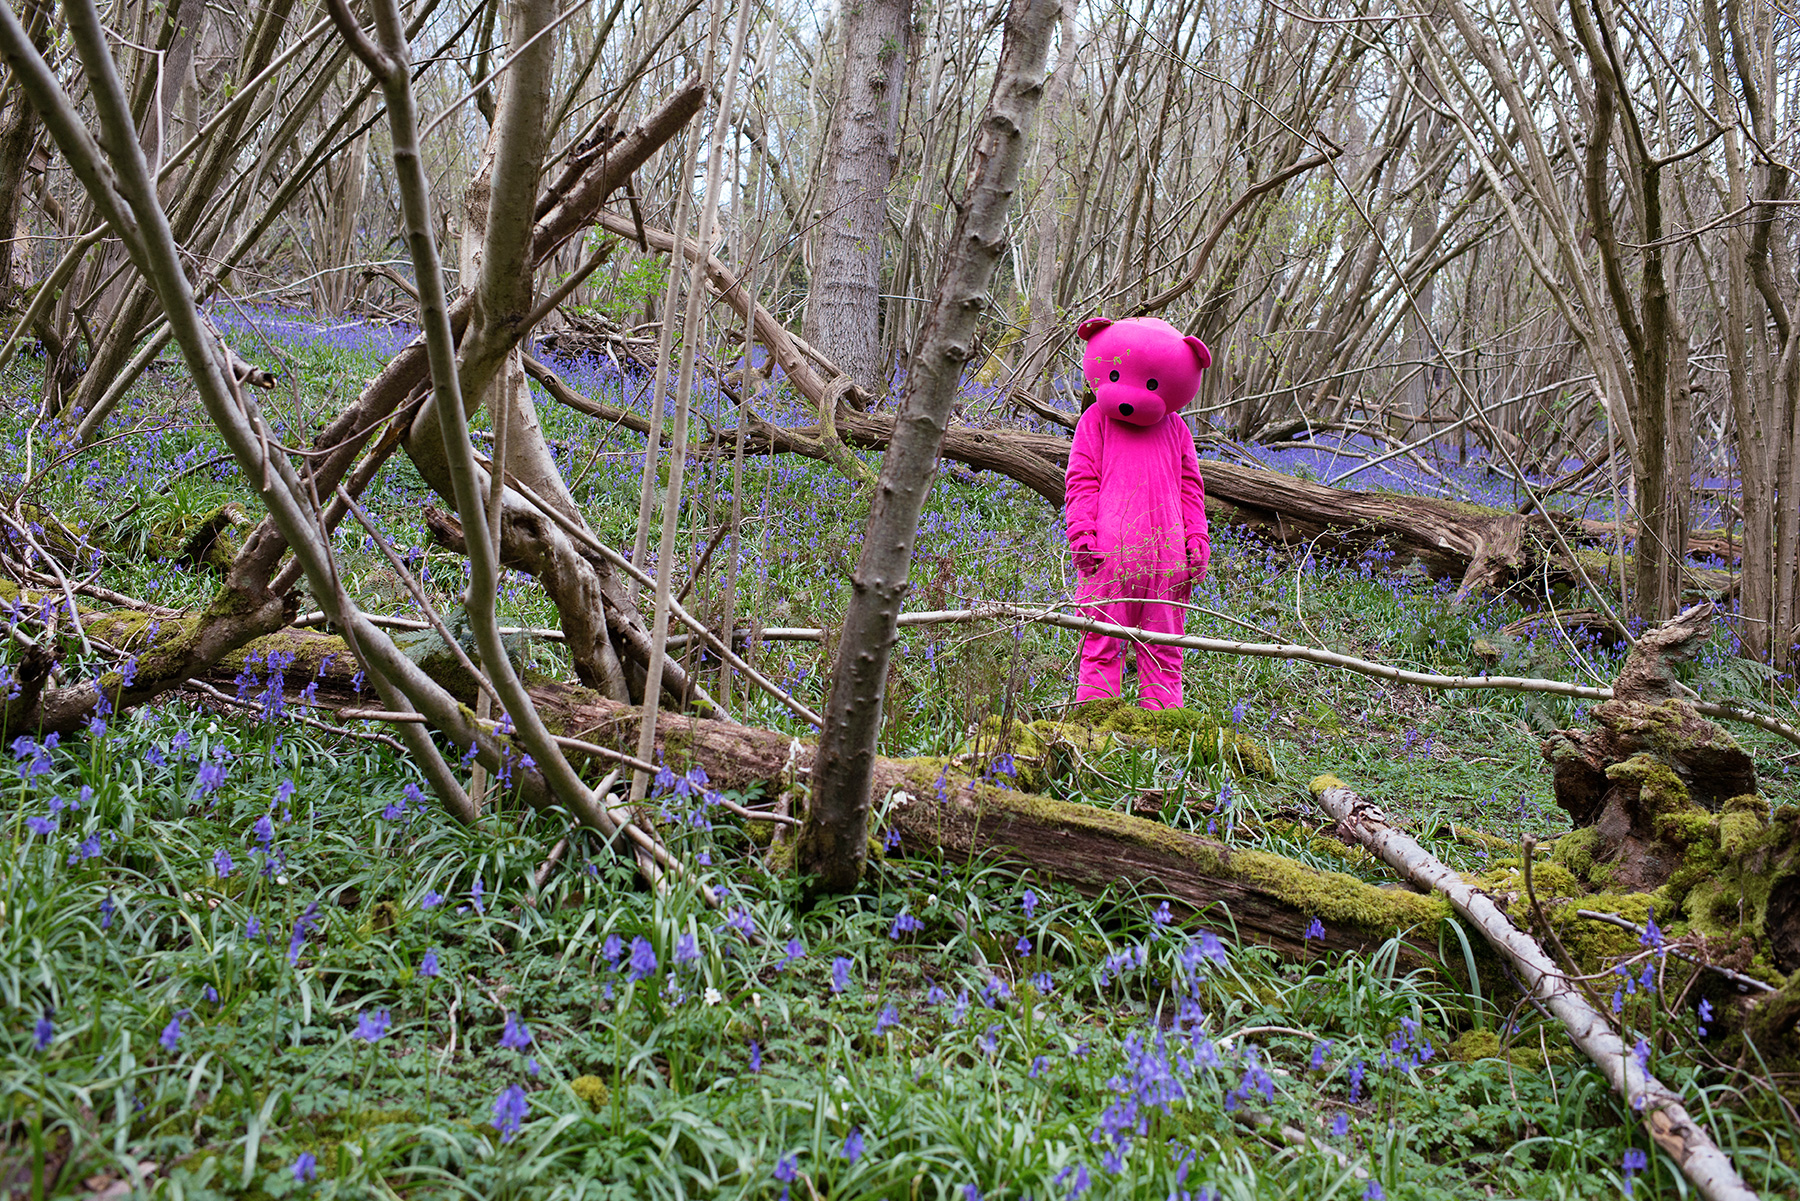 The Blue Bells - The Pink Bear - Photographs | LUAP | Paul Robinson ...